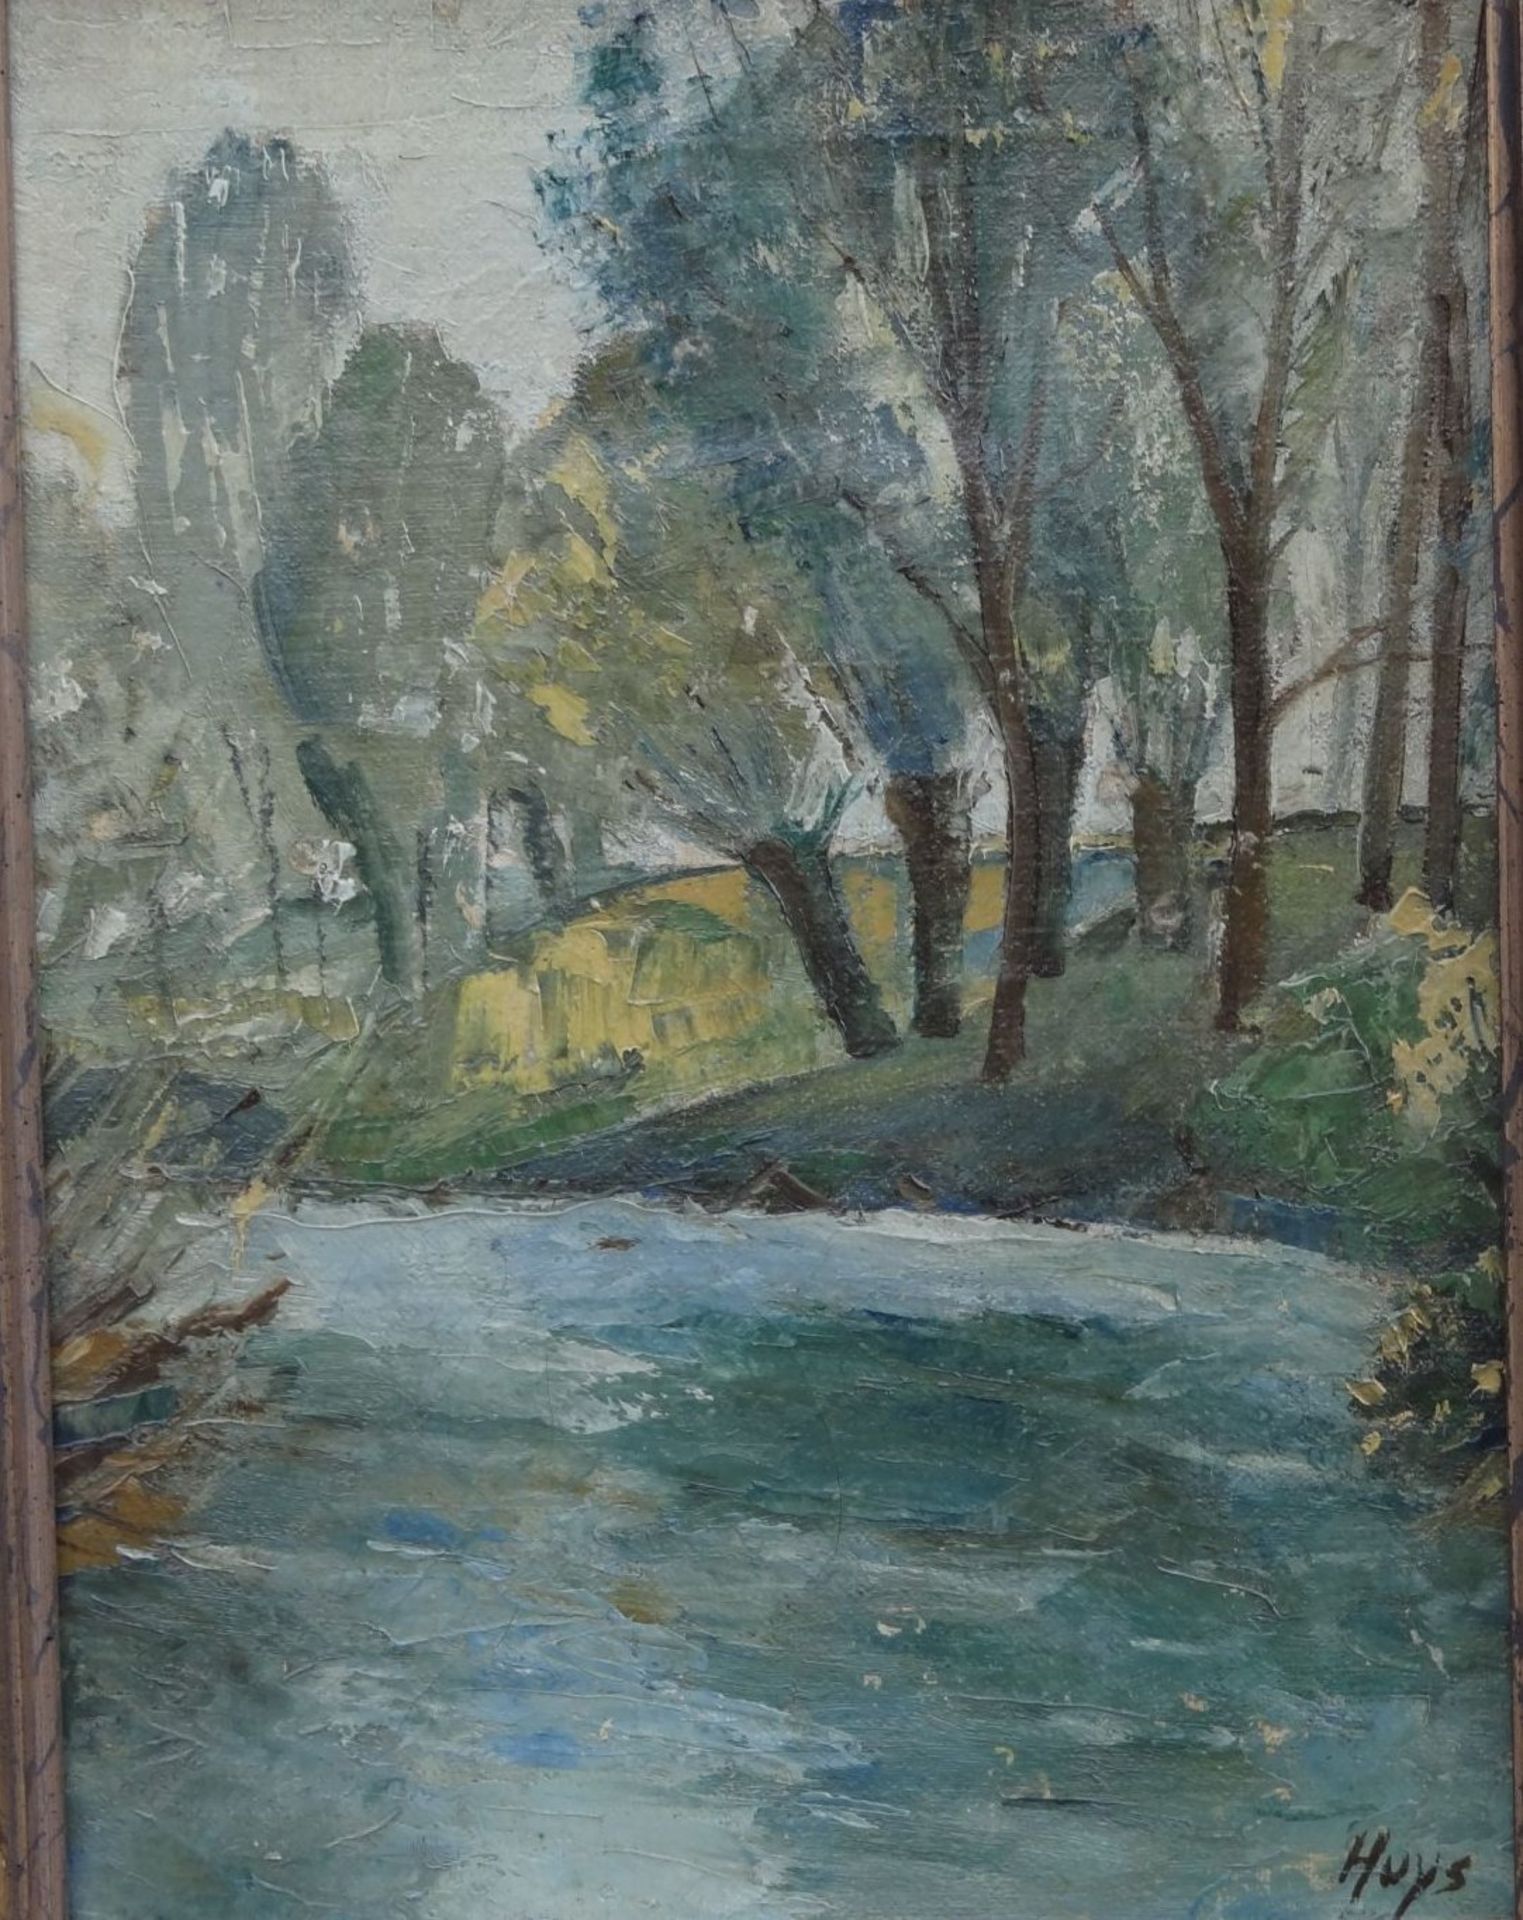 Bernhard HUYS (1896-1973) "Bäume am Ufer" Öl/Leinen, gerahmt, RG 54x44